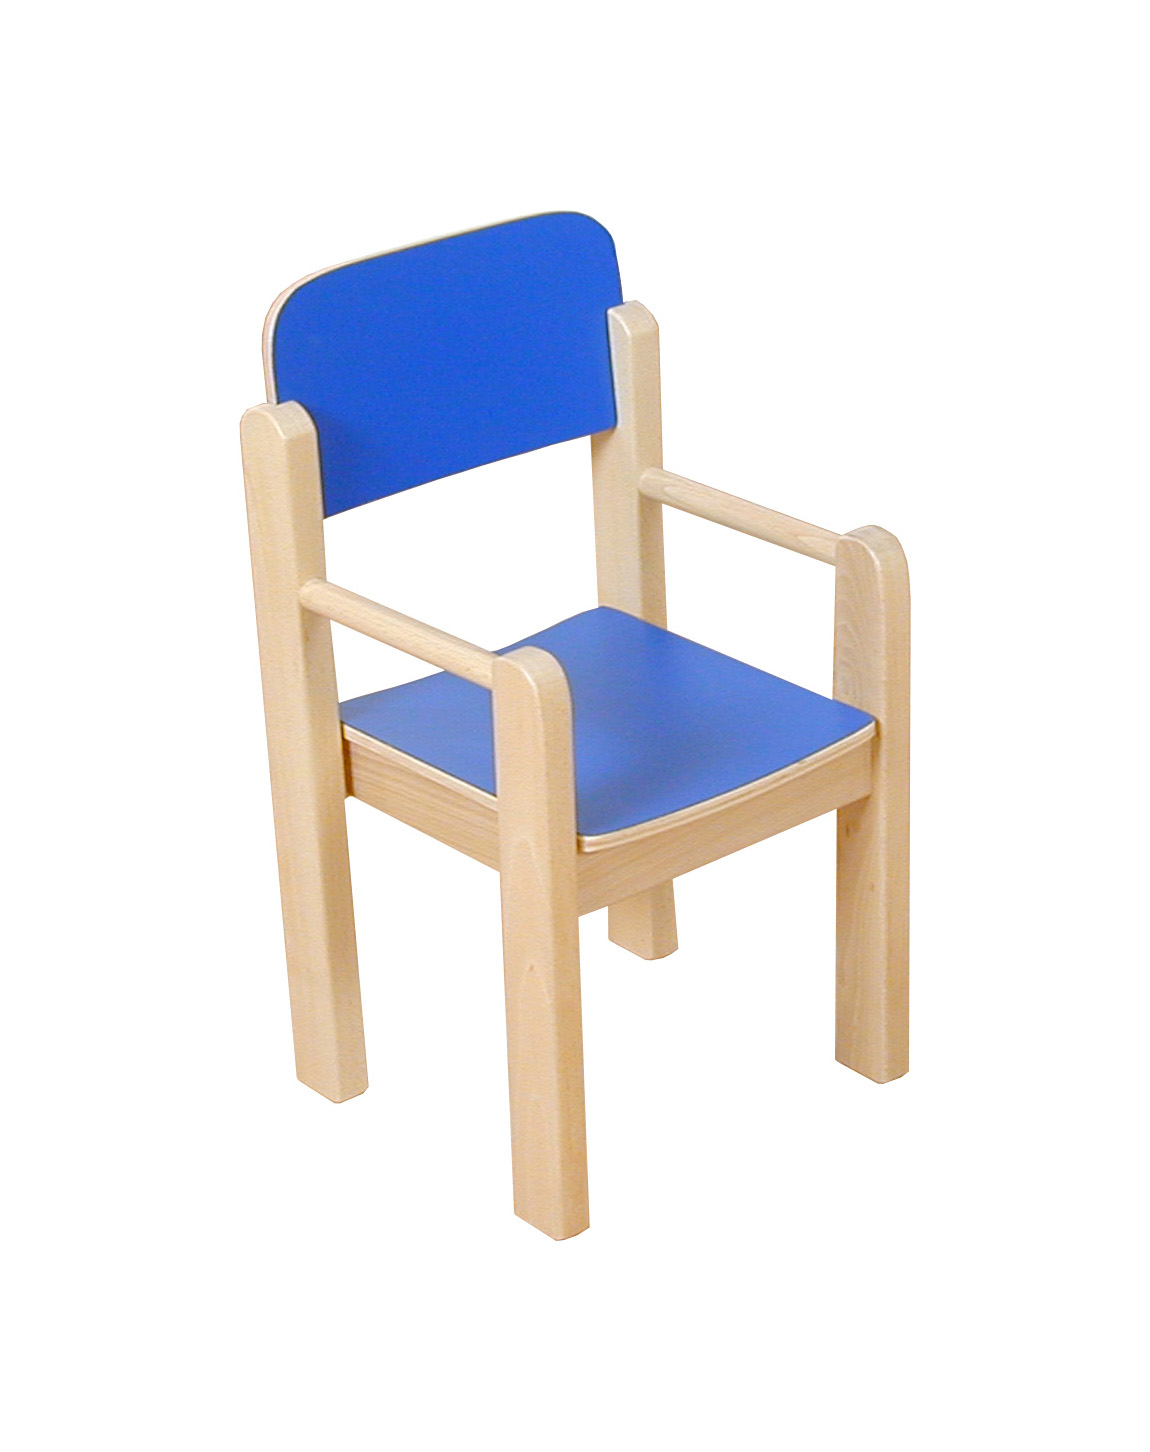 Silla infantil de madera 55 x 33 x 26 cm, silla para niños de madera  natural con reposapiés